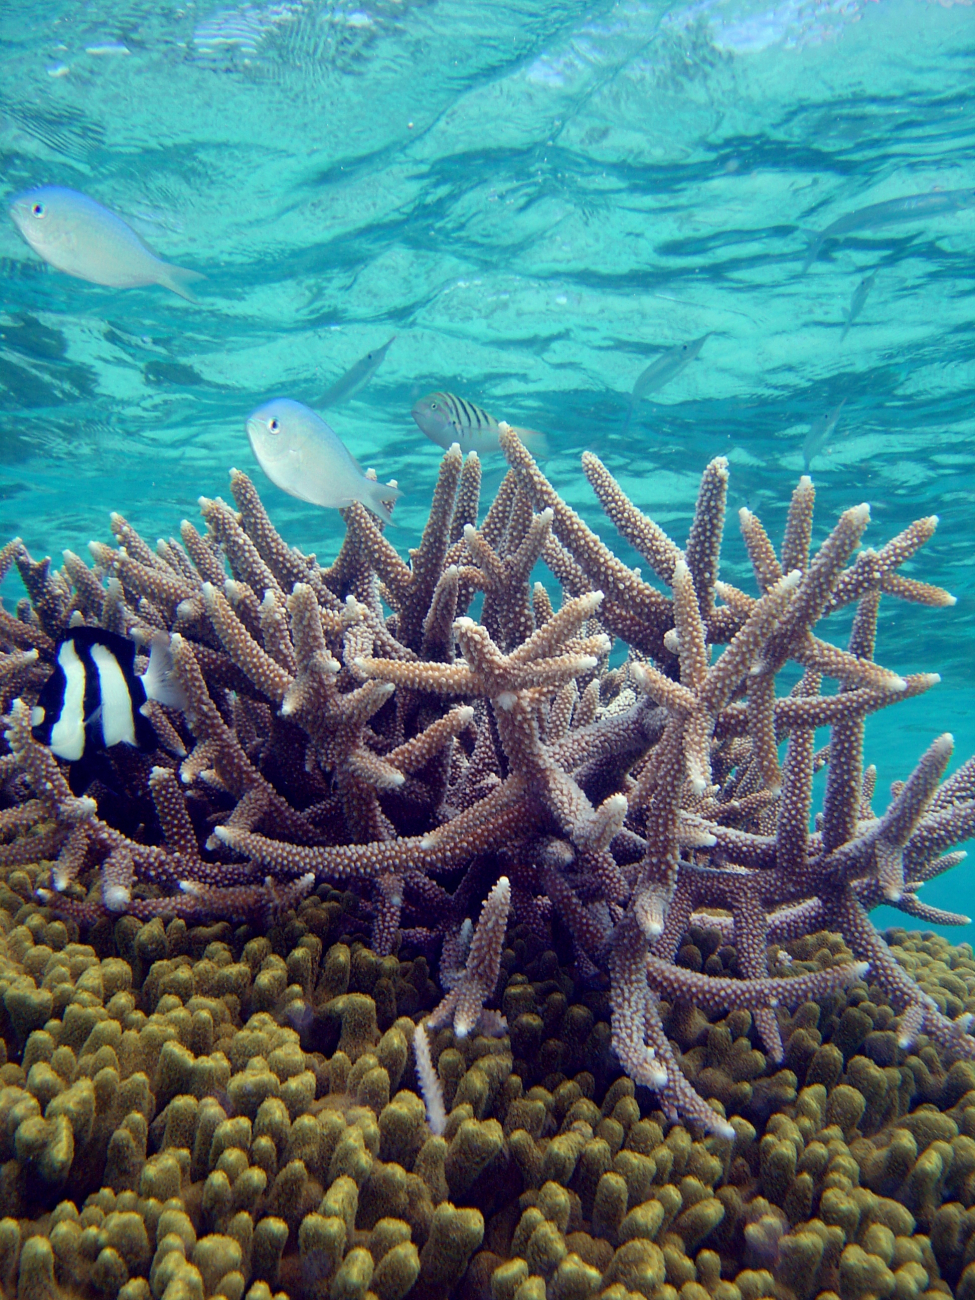 Reef scene with damselfish (Dascyllus aruanus) in left foreground